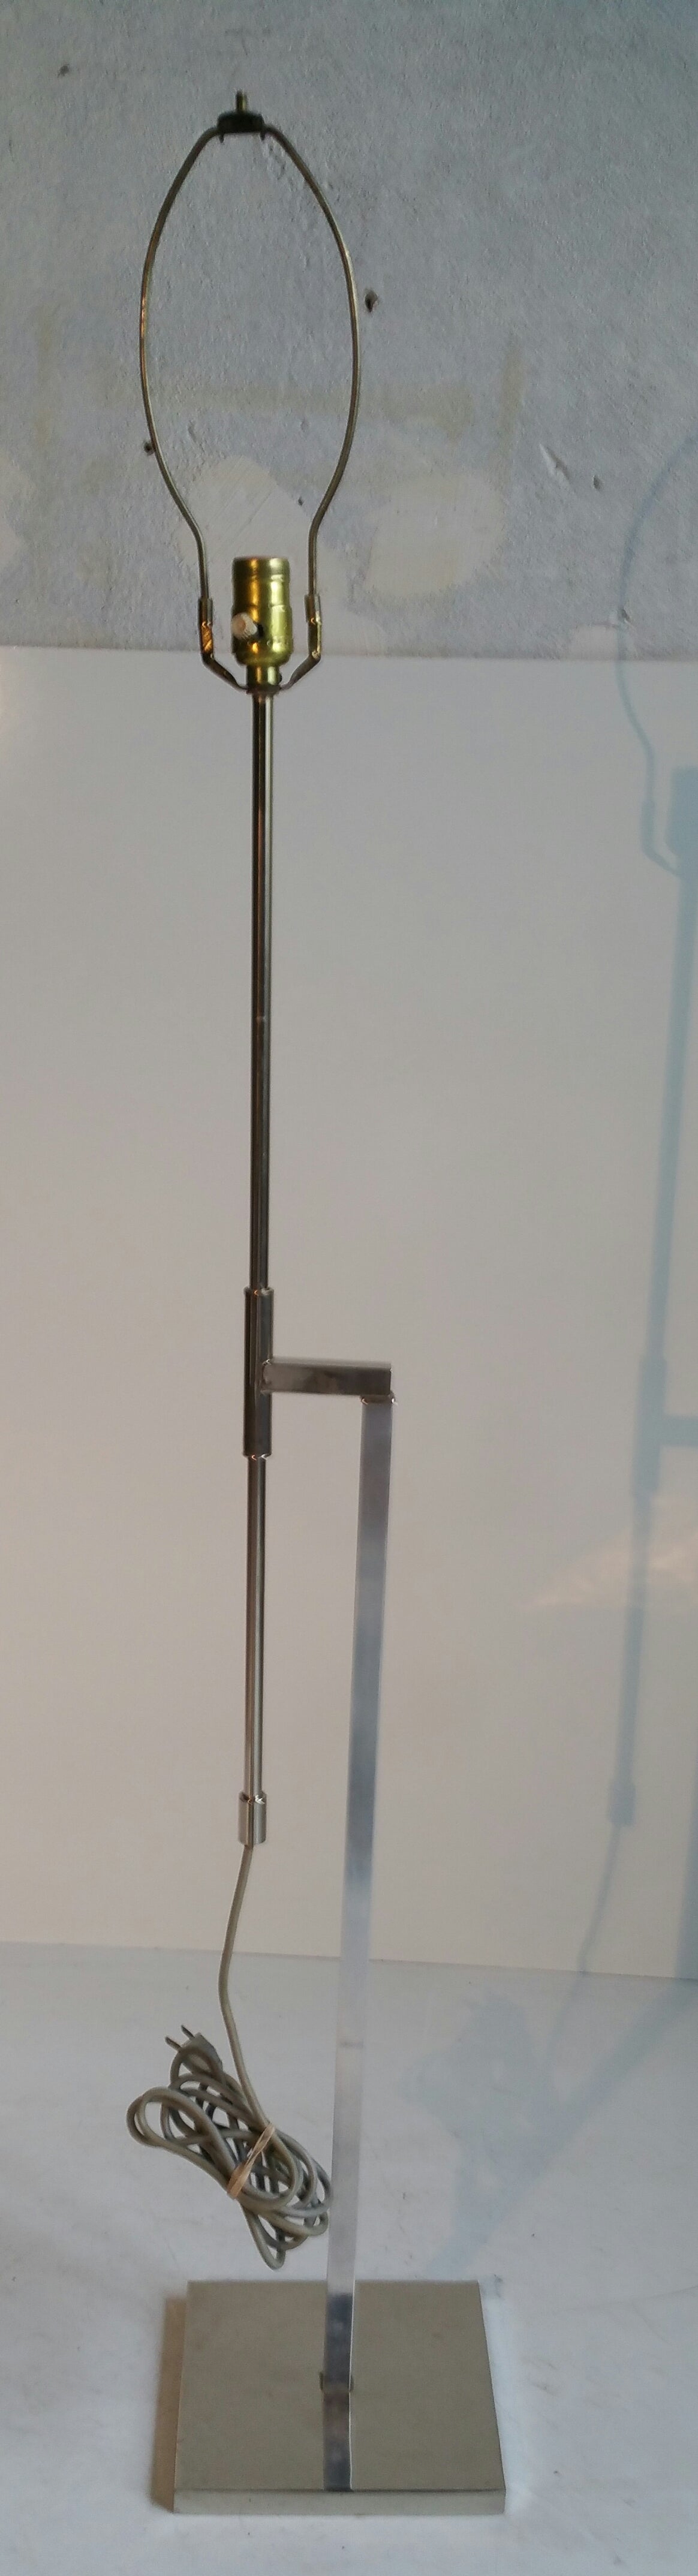 Laurel Adjustable and Rotating Chromed Steel Floor Lamp with adjustable height:67